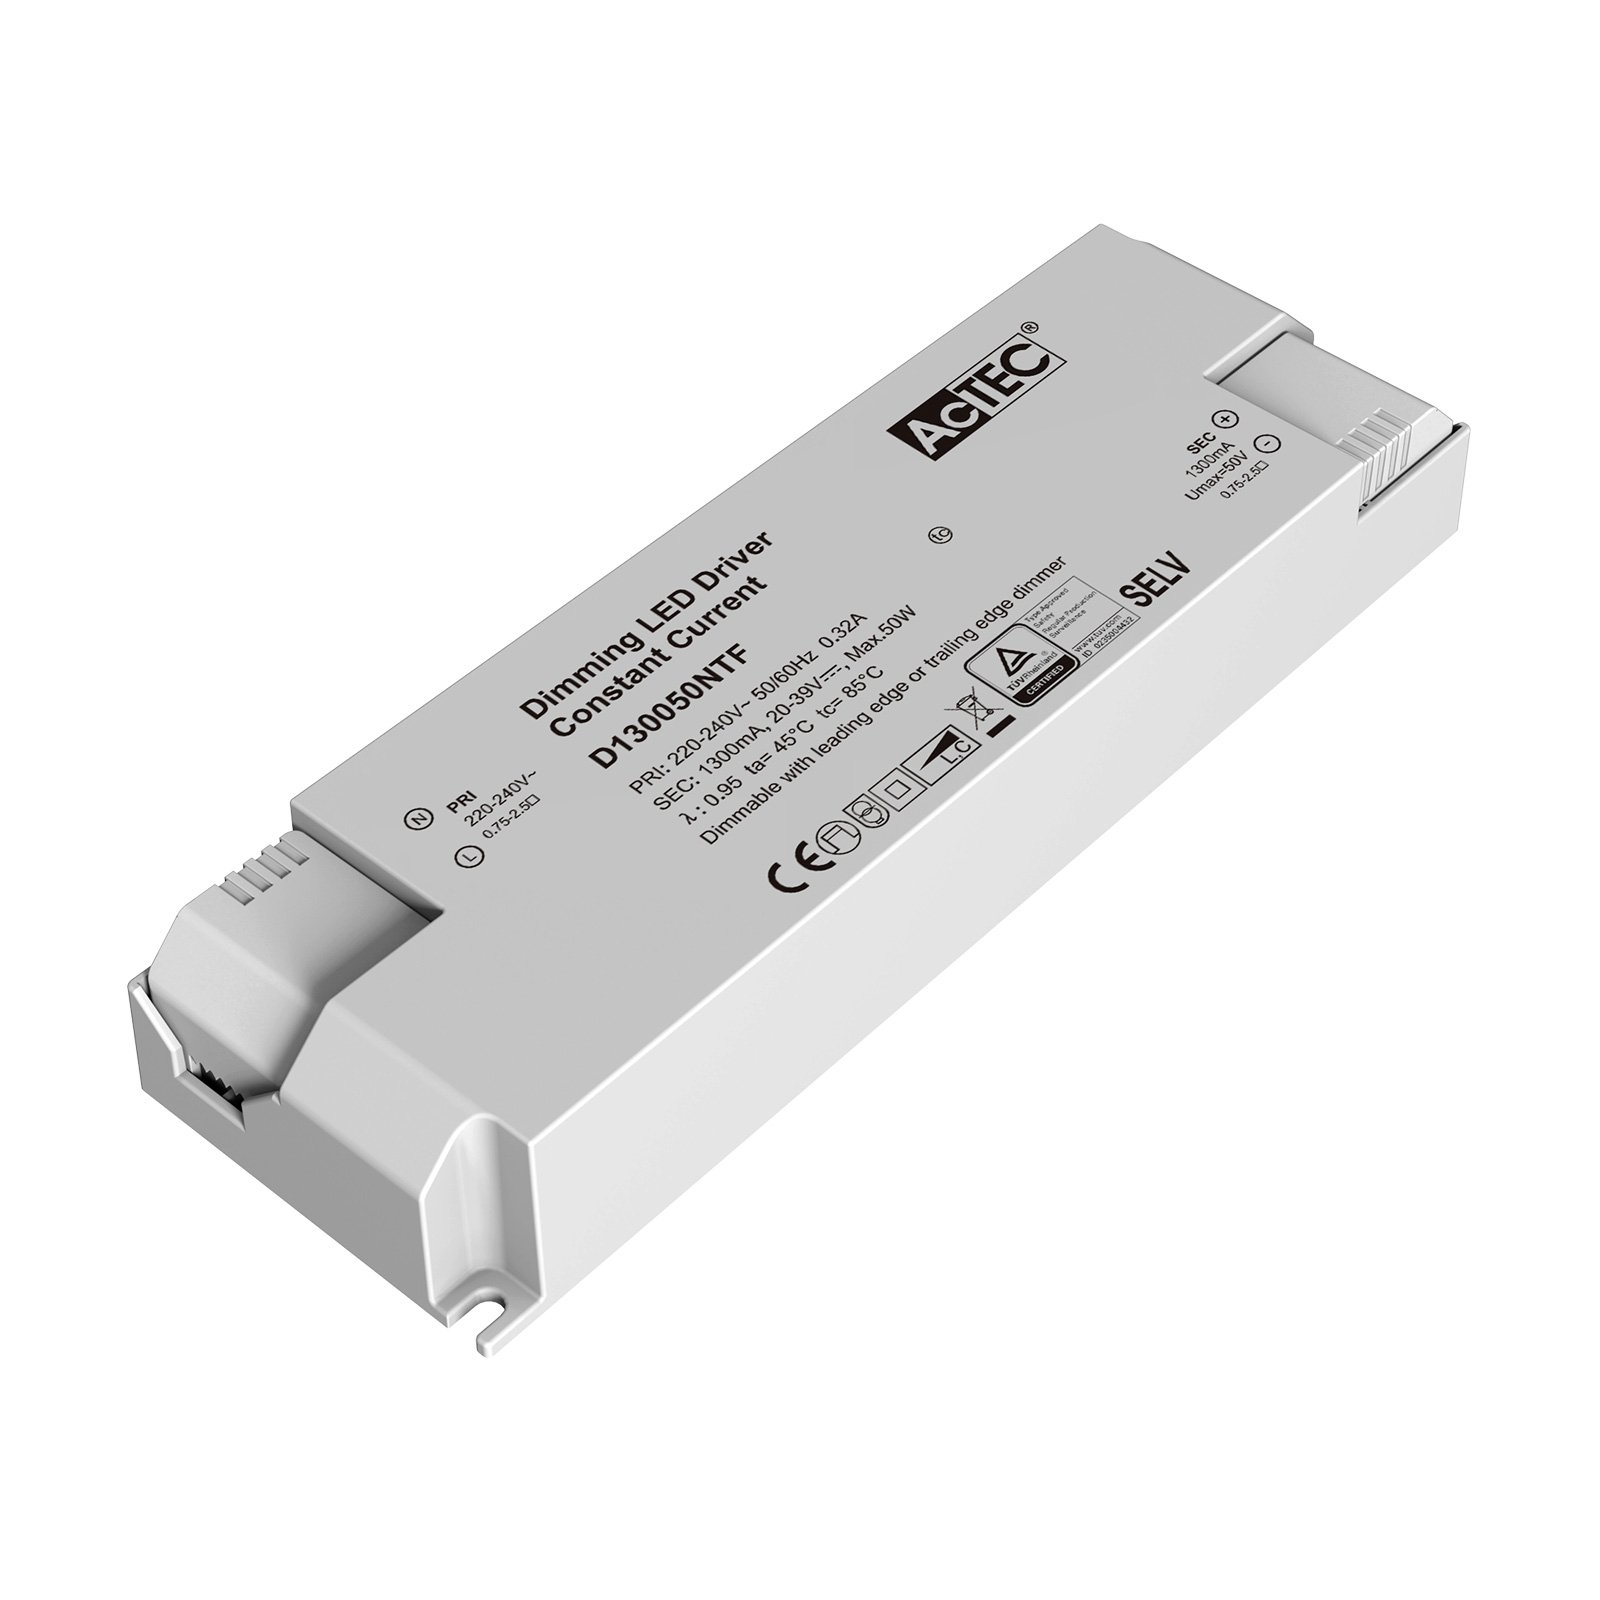 AcTEC Triac LED vezérlő CC max. 50W 1300mA